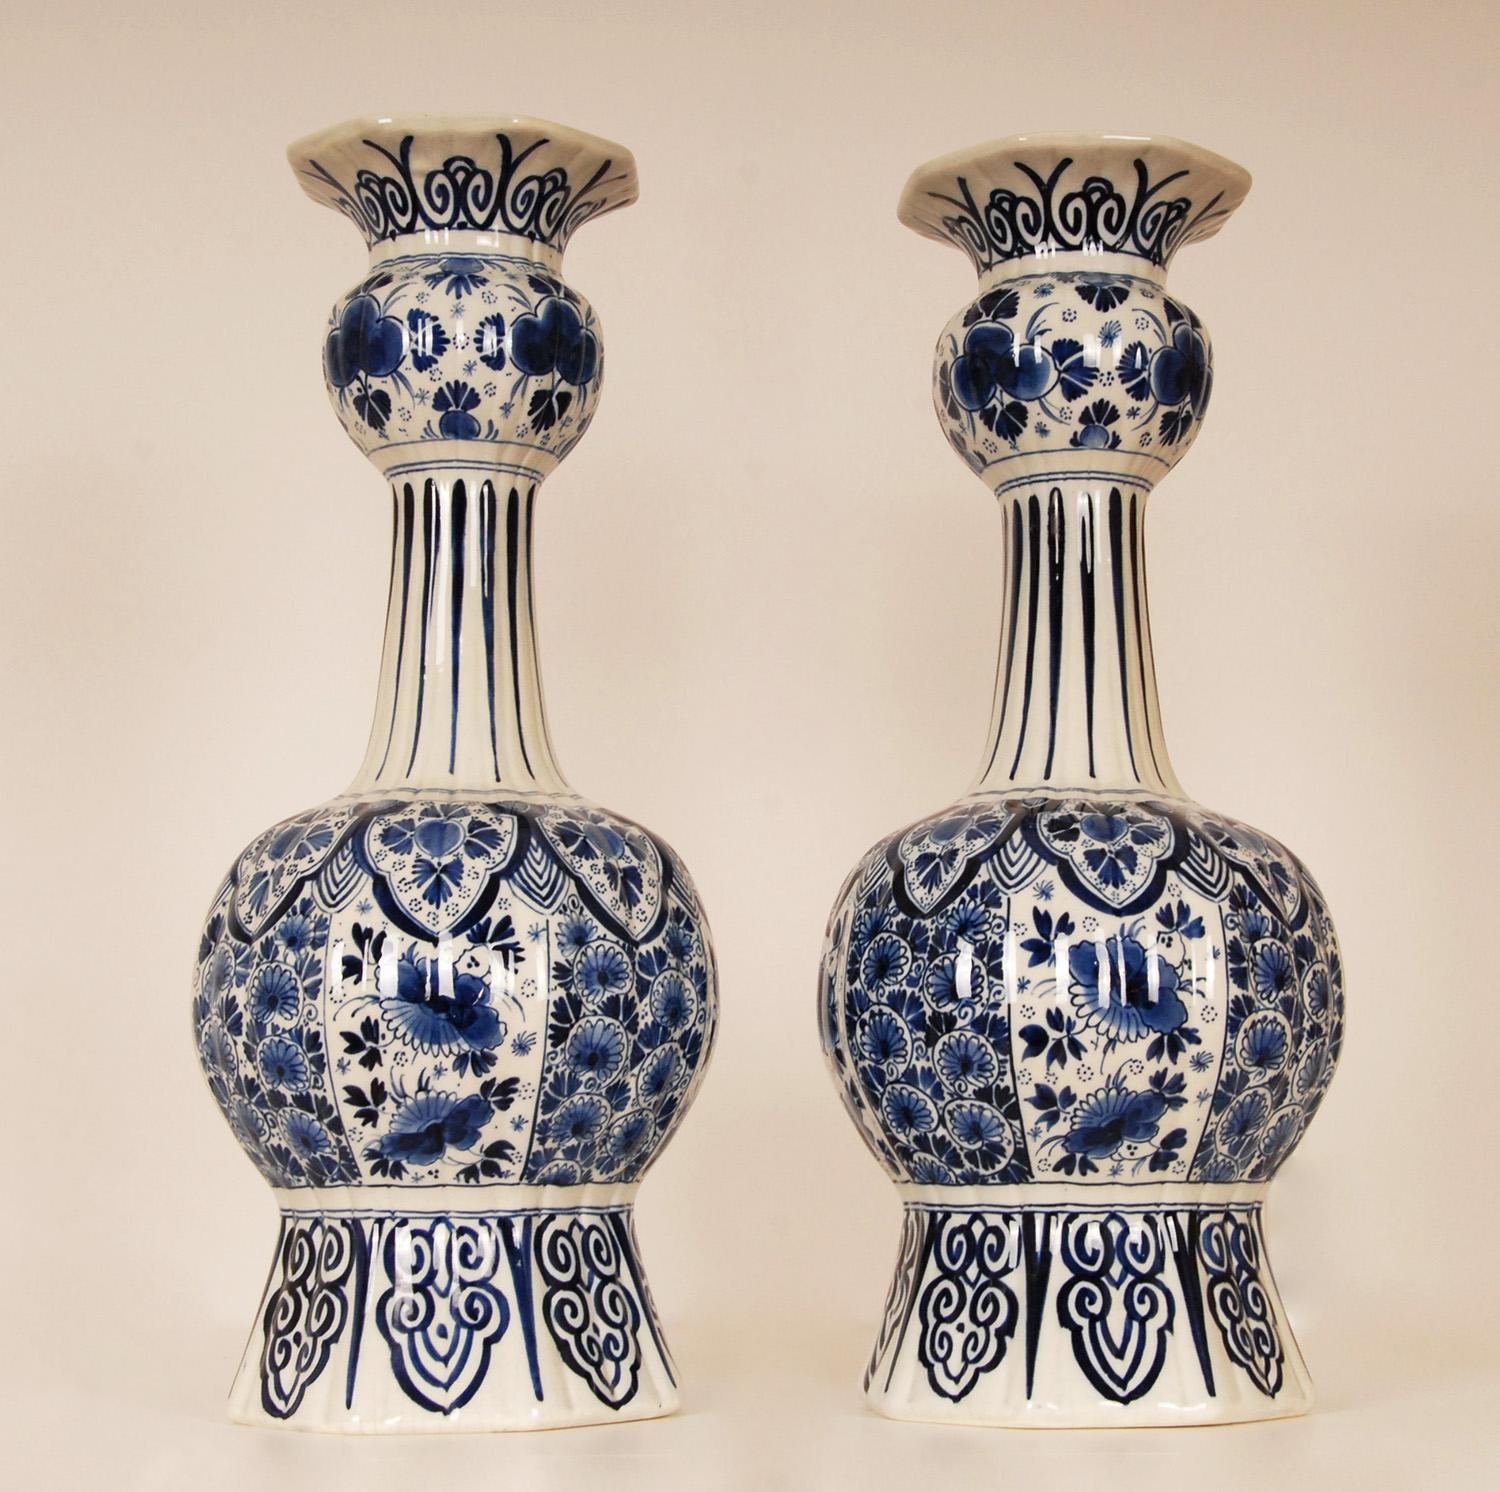 Antique Royal Delft Vases Chinoiserie Blue White Knobble Vases Earthenware pair For Sale 7